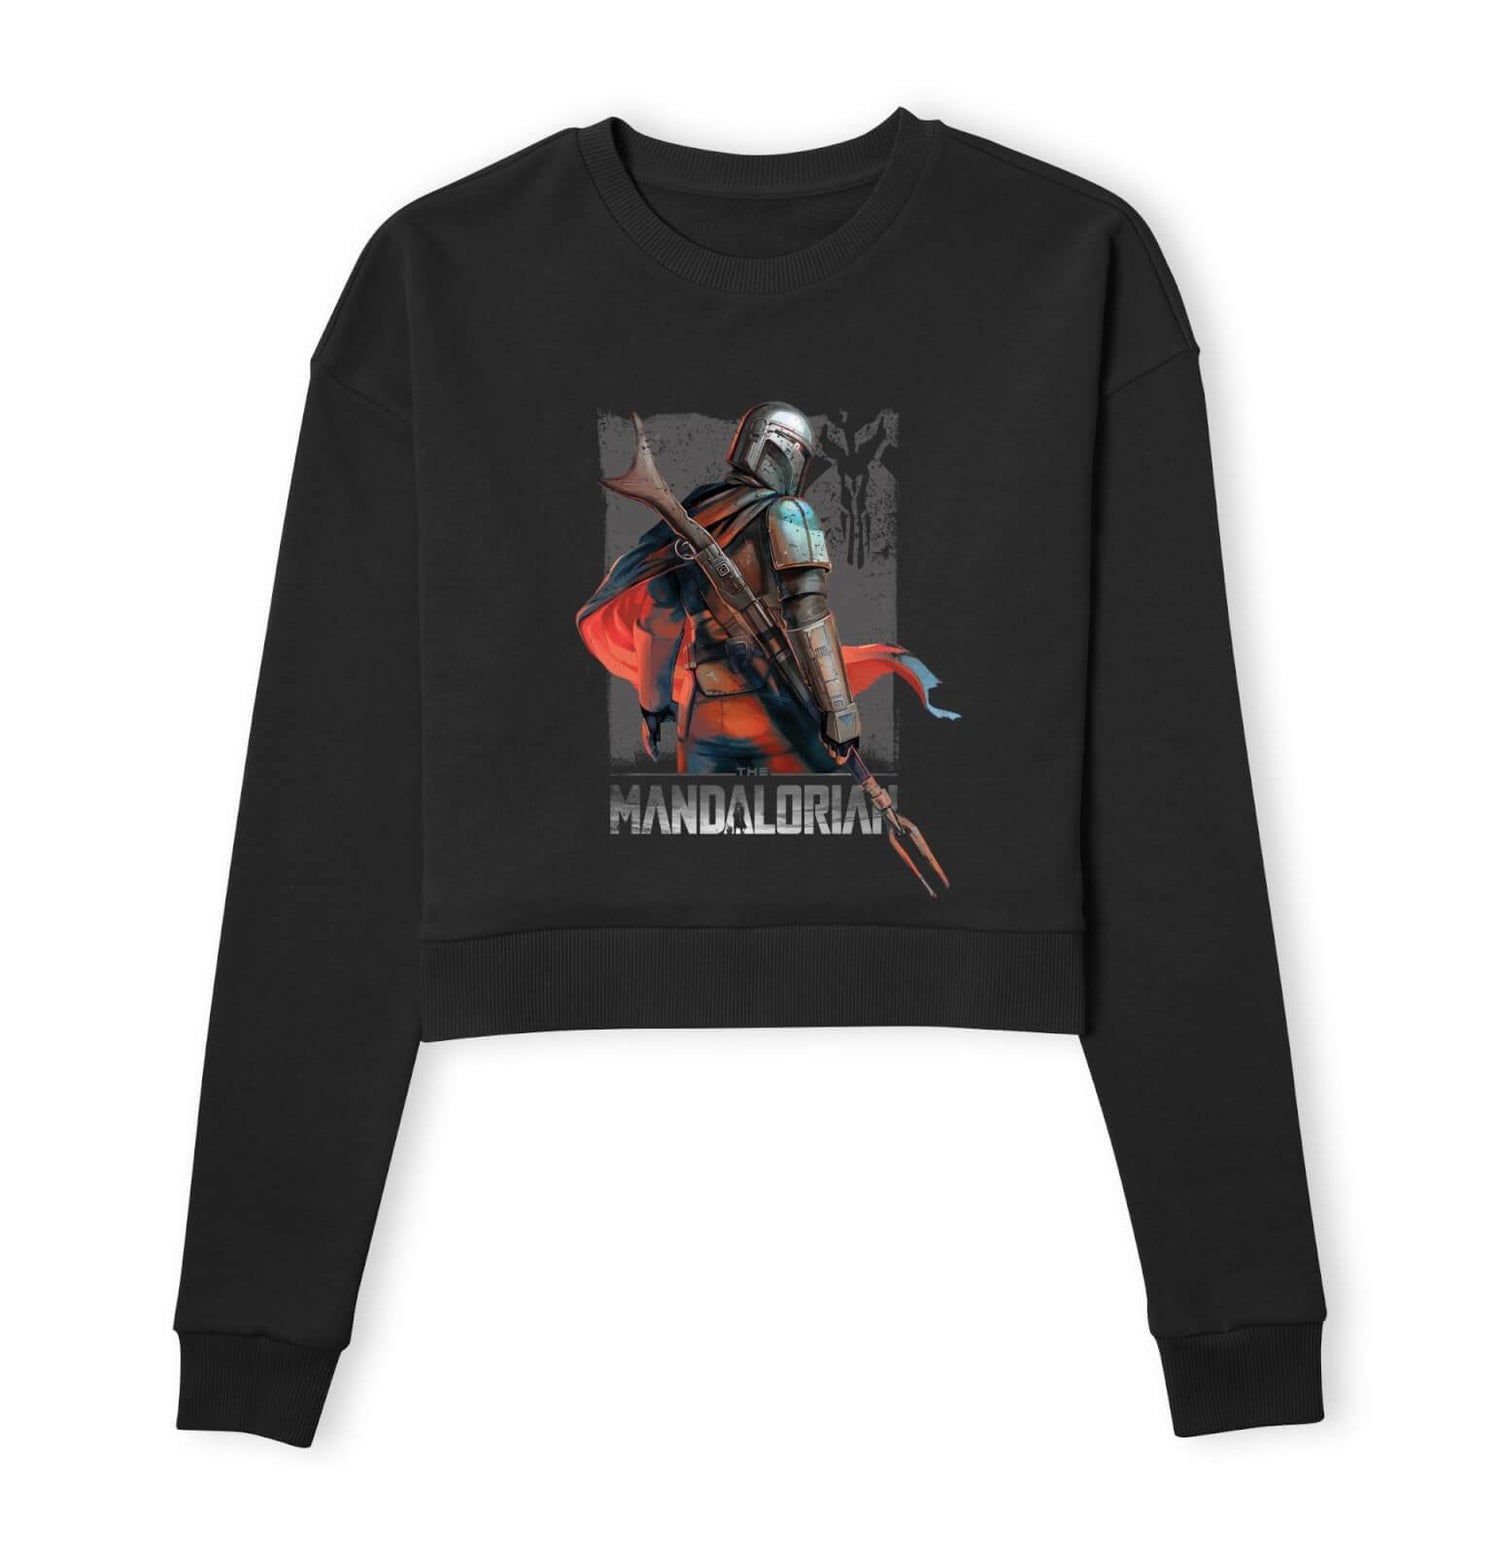 Star Wars The Mandalorian Colour Edit Women's Cropped Sweatshirt - Black